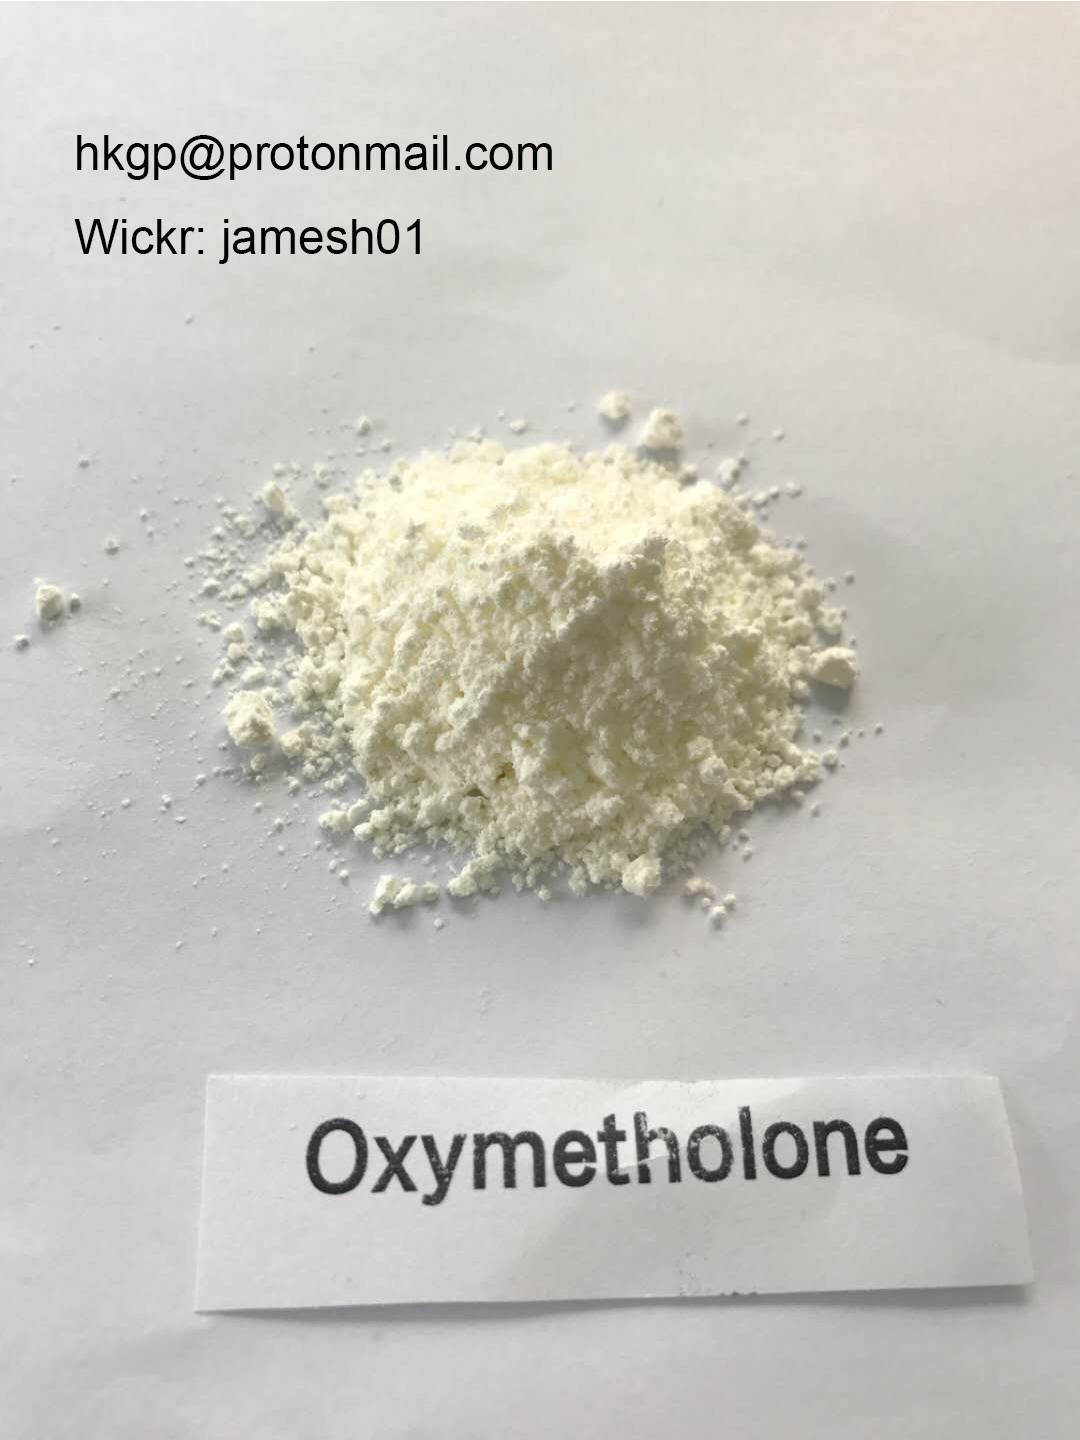 Pure oxymetholone powder